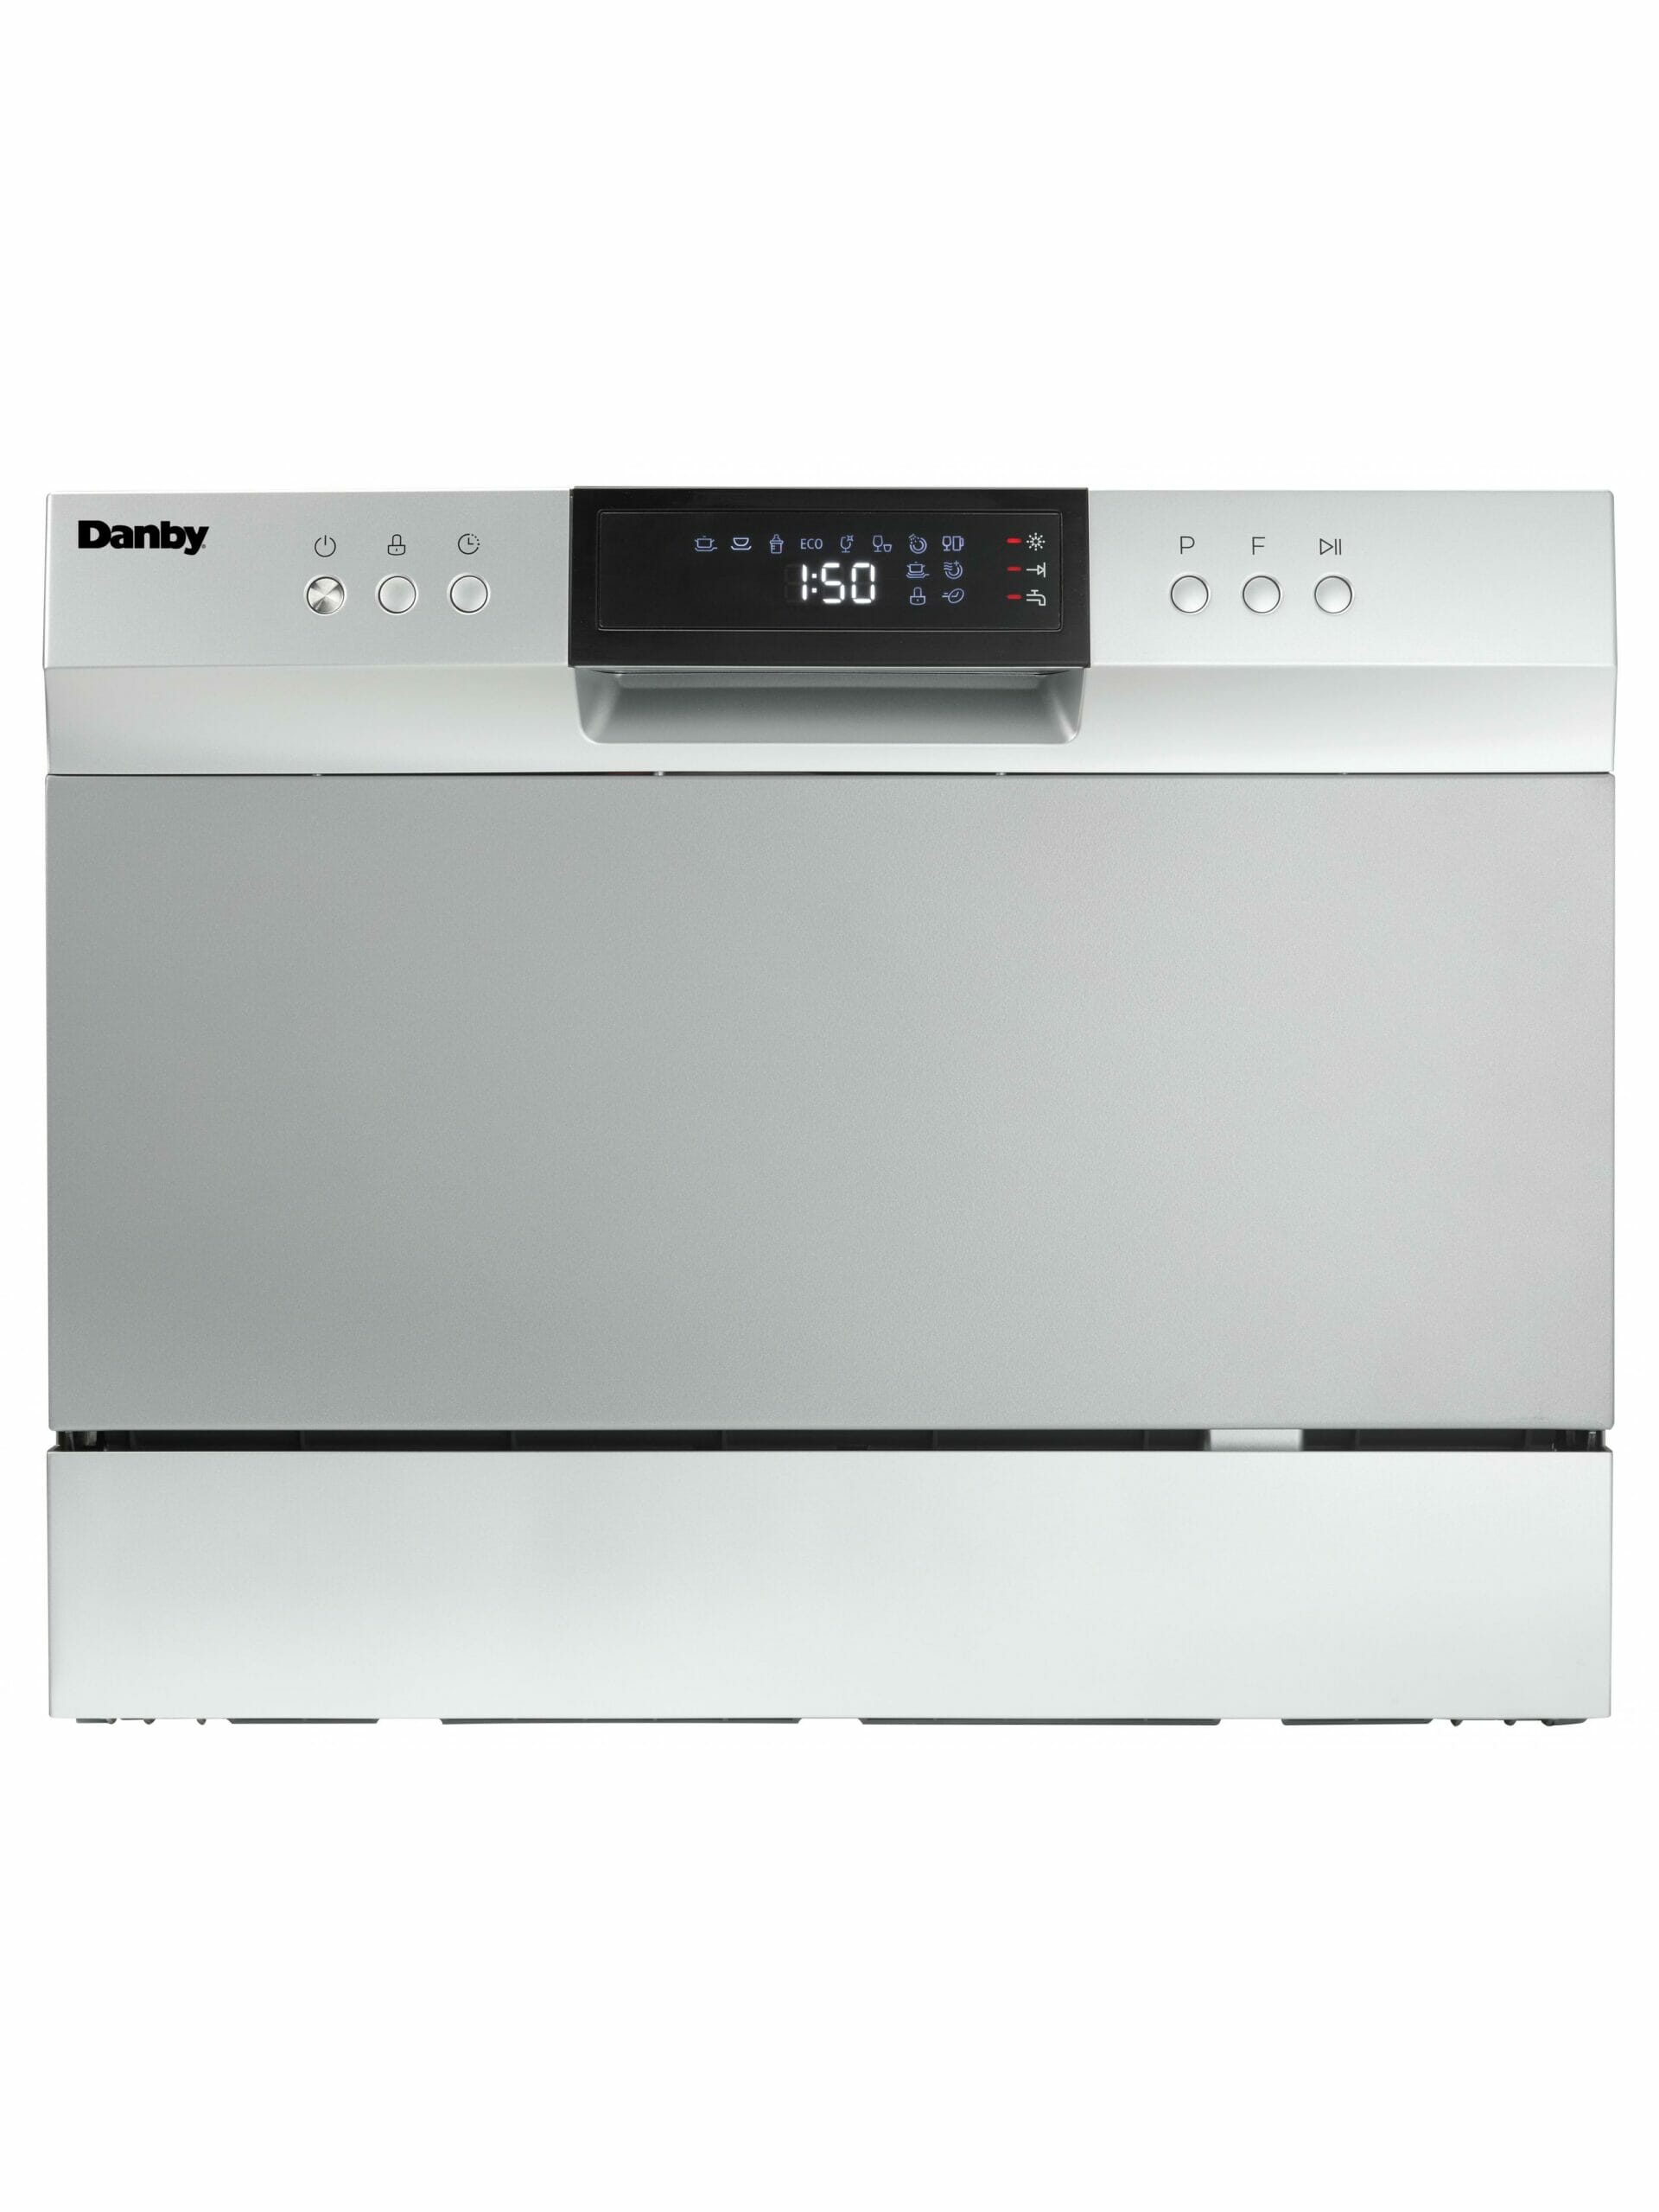 Portable Countertop Dishwasher 3-5Washing Programs Display Automatic  Dishwashing